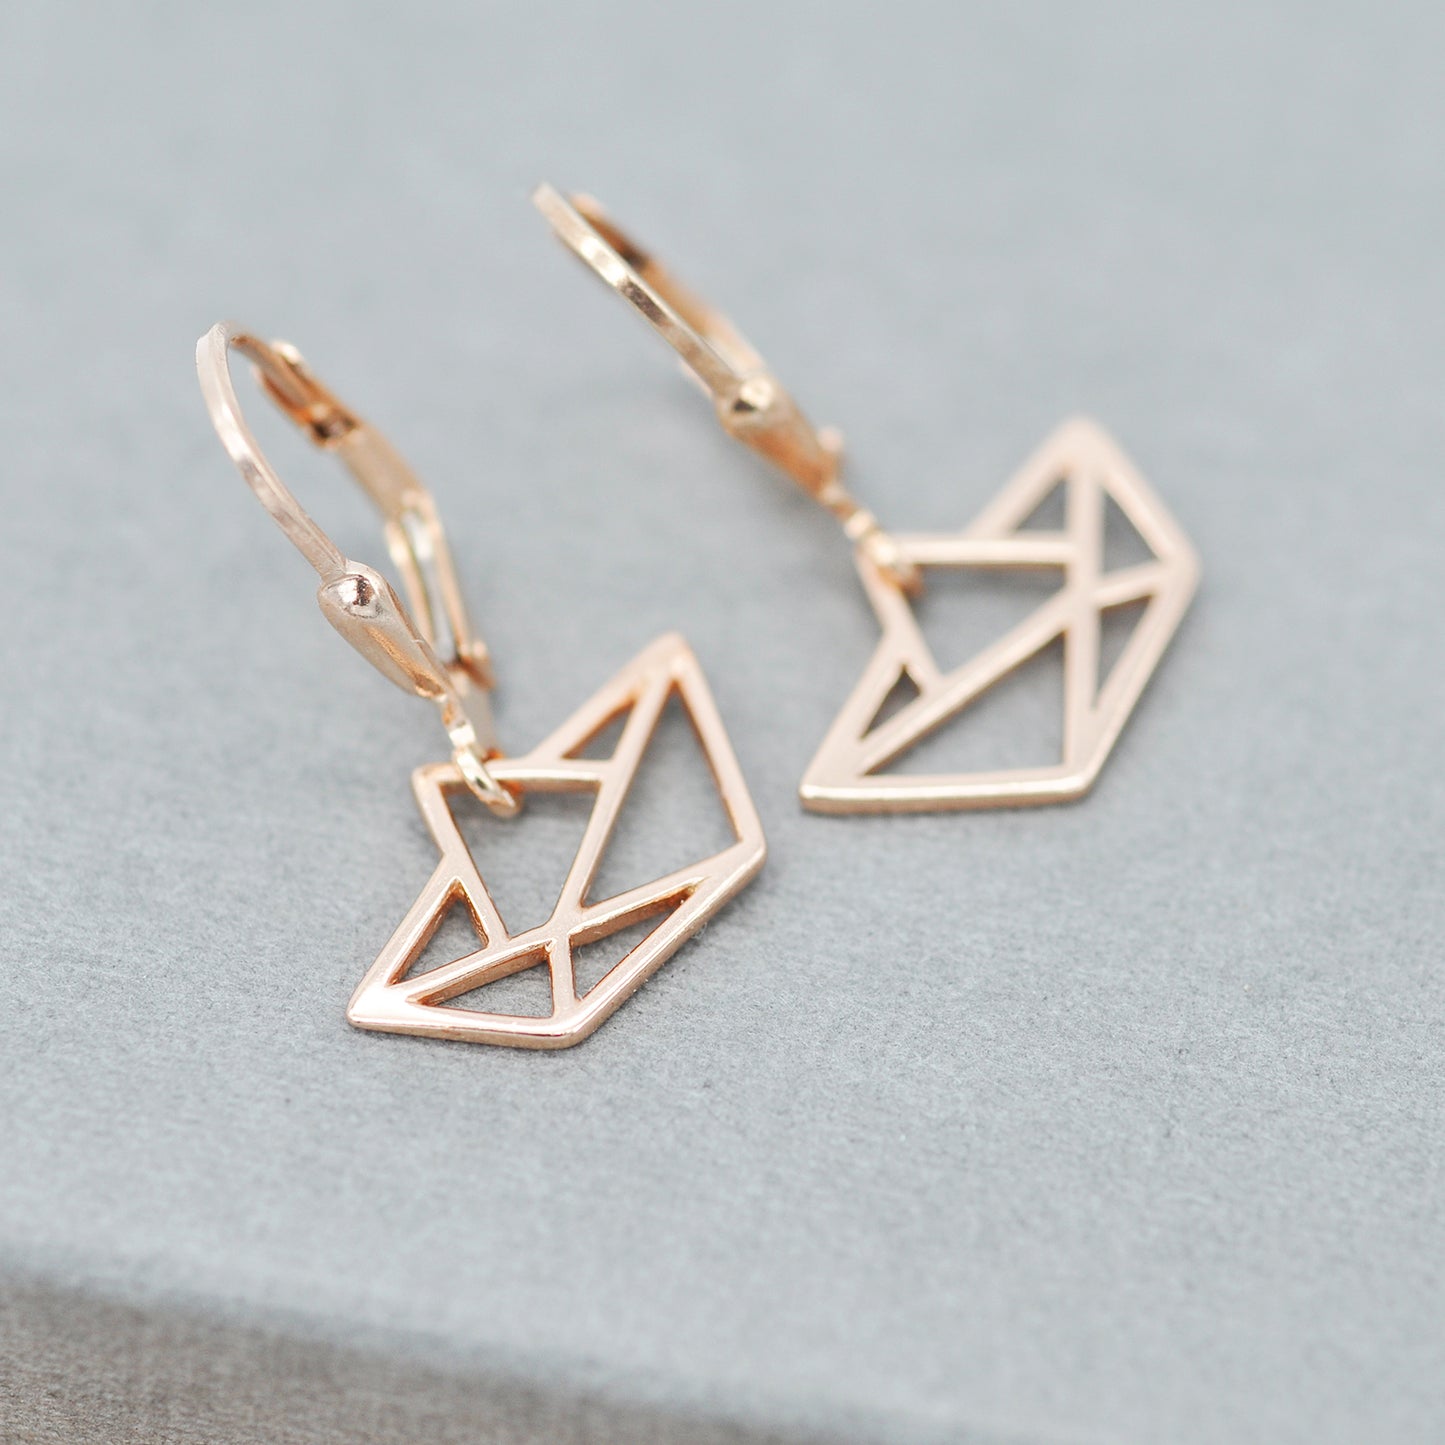 Paper boat origami earrings / 925 sterling silver